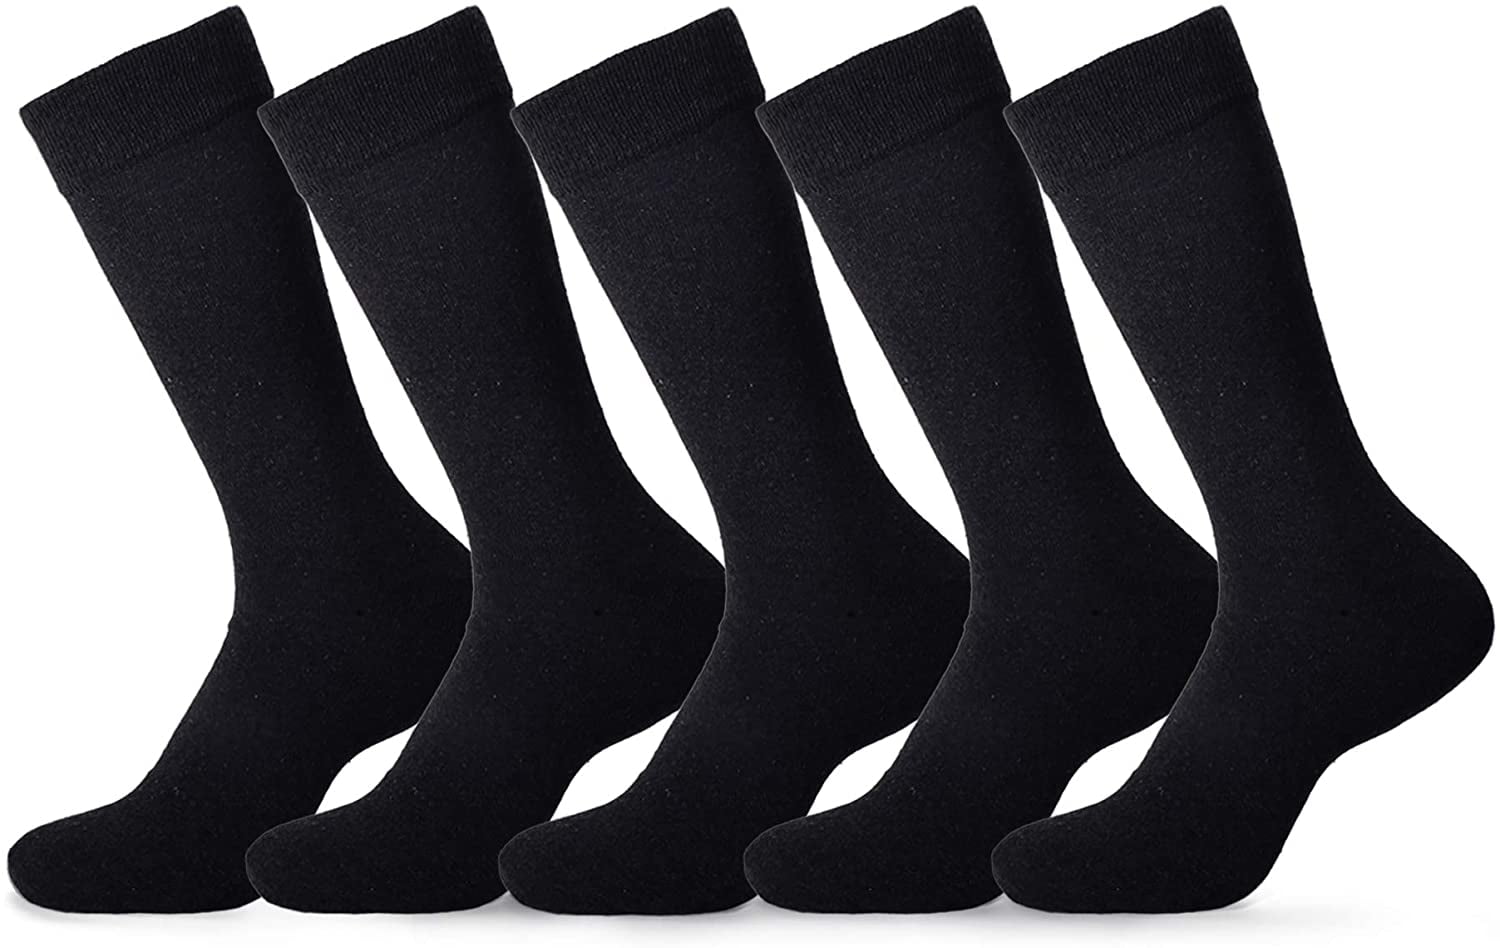 Fits 10-13 Striped Solid Argyle & More Premium Dress Socks for Men 3 Pairs Gift Set